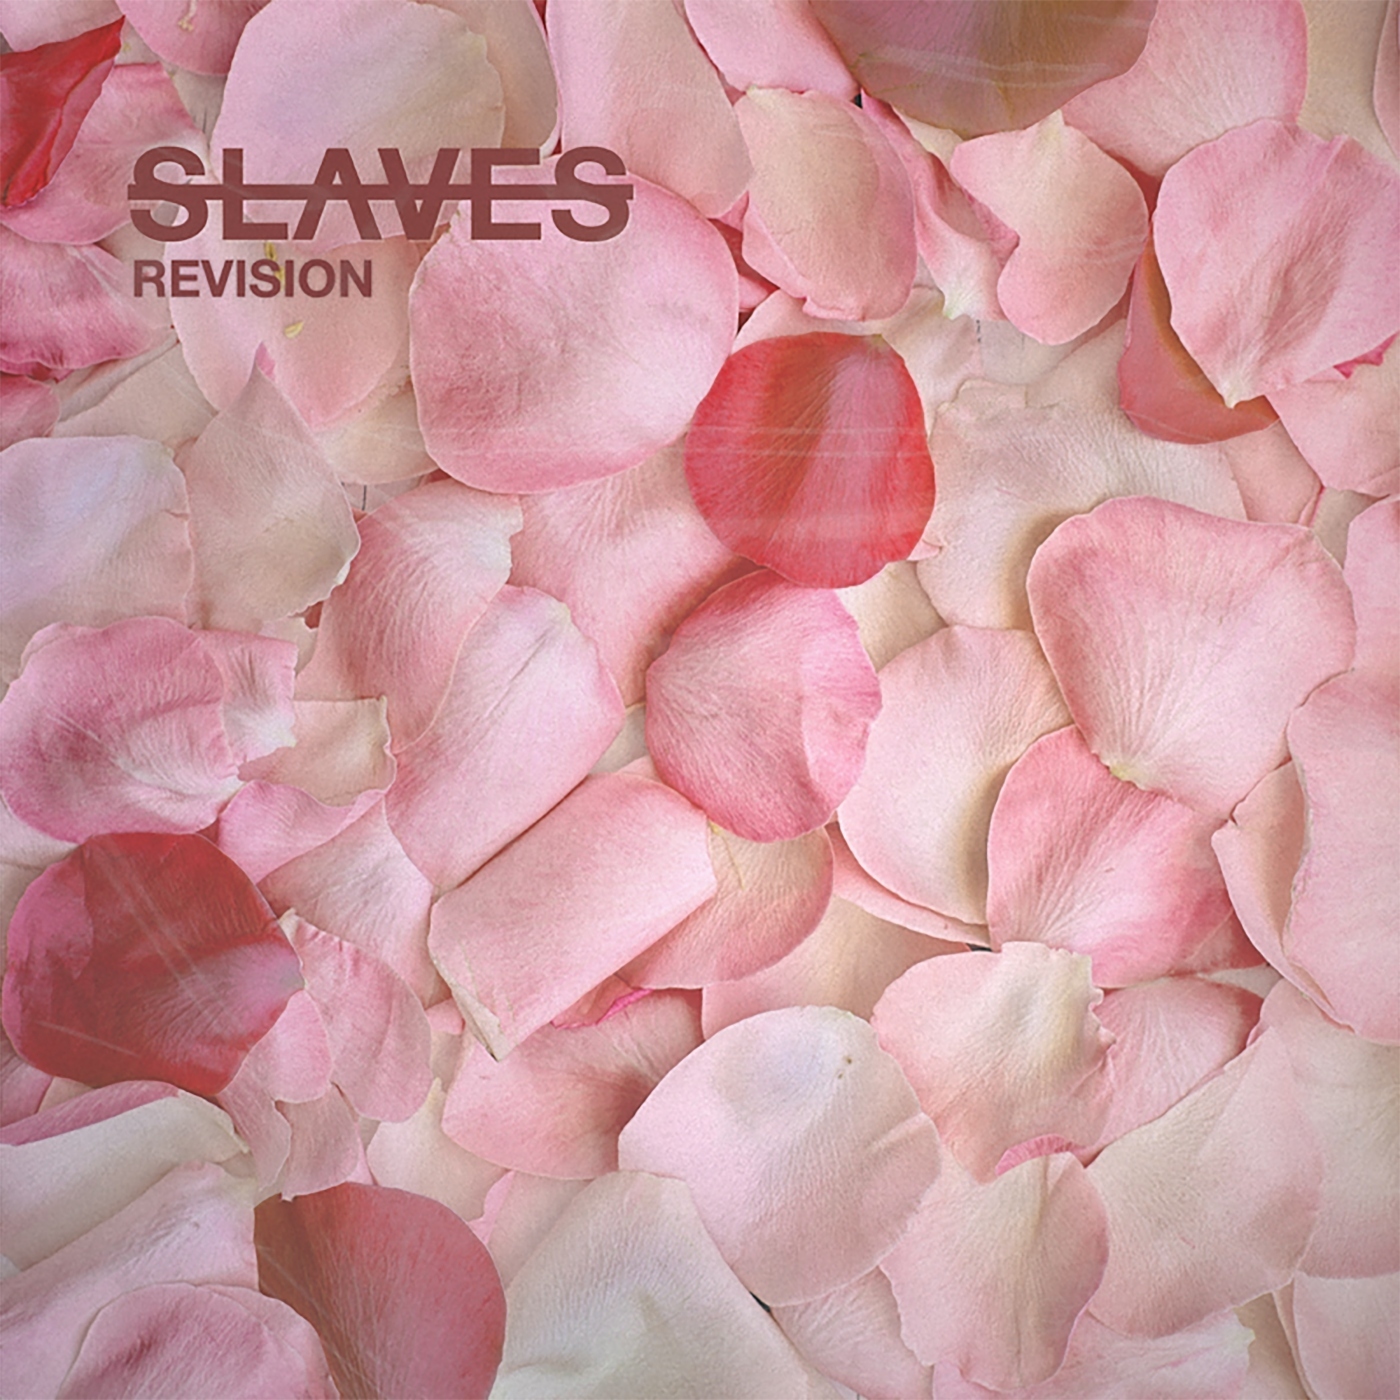 Slaves - Revision (2019)